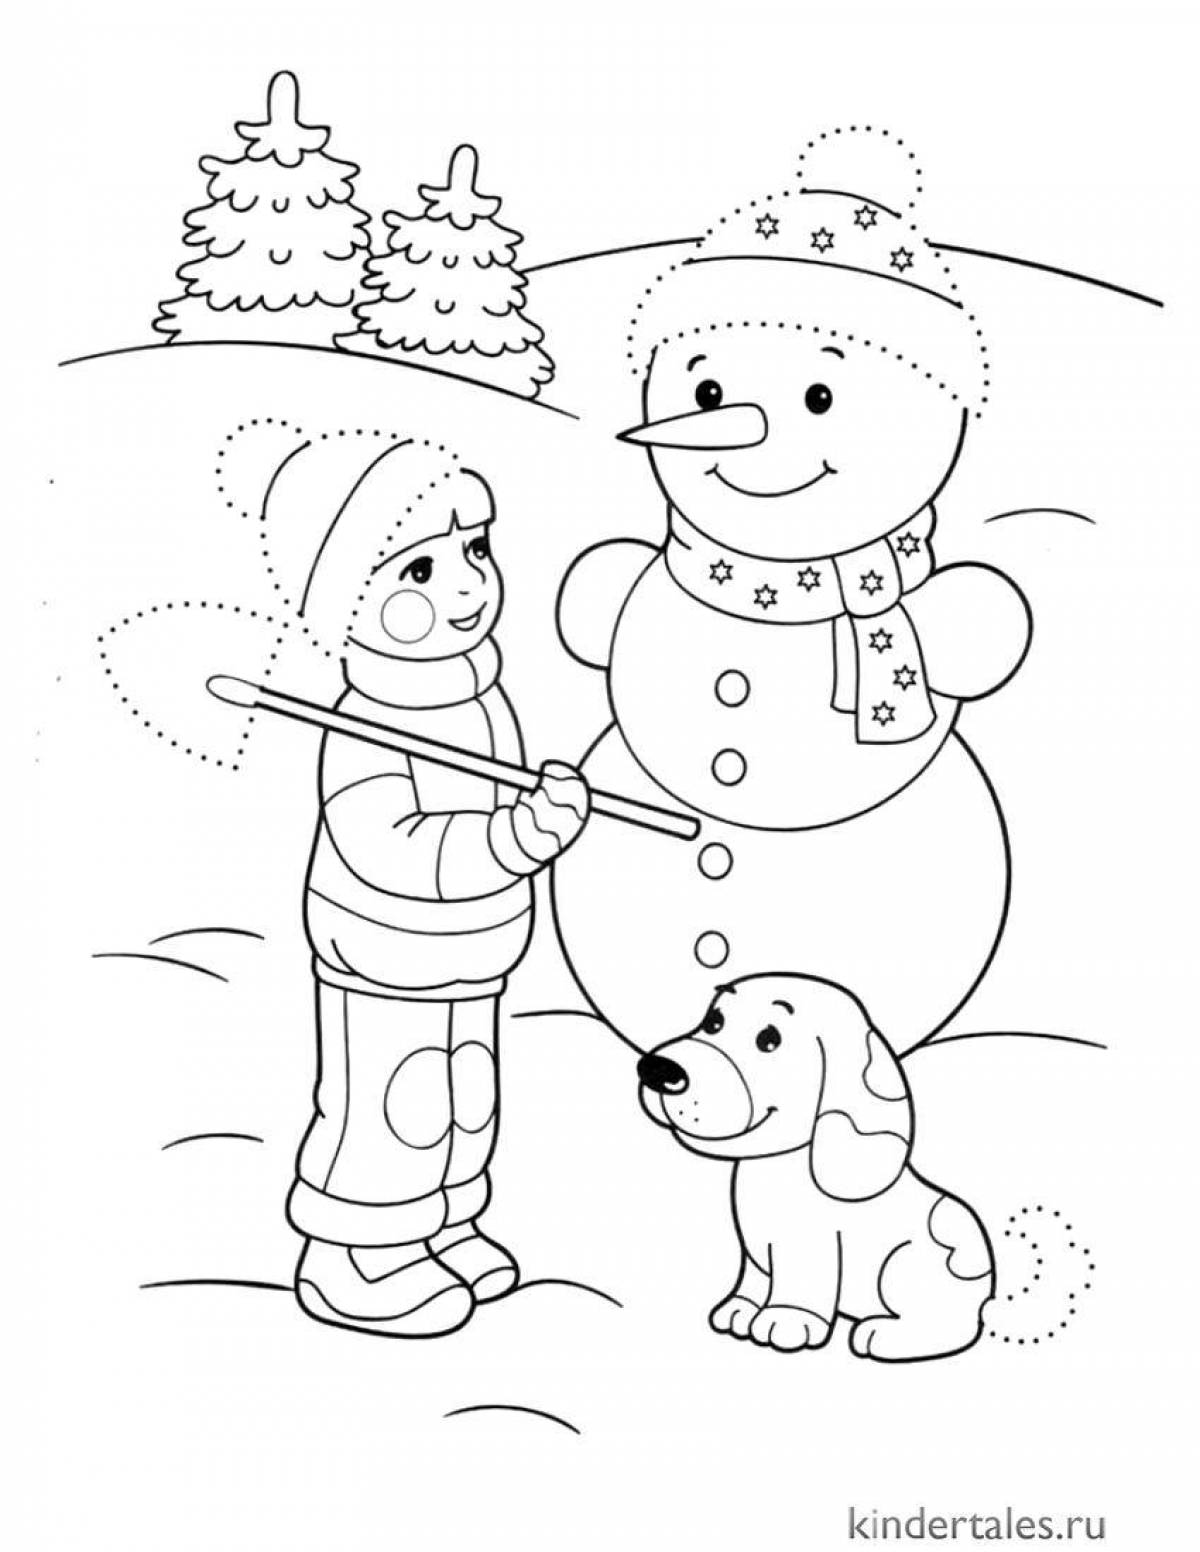 Cute winter coloring book